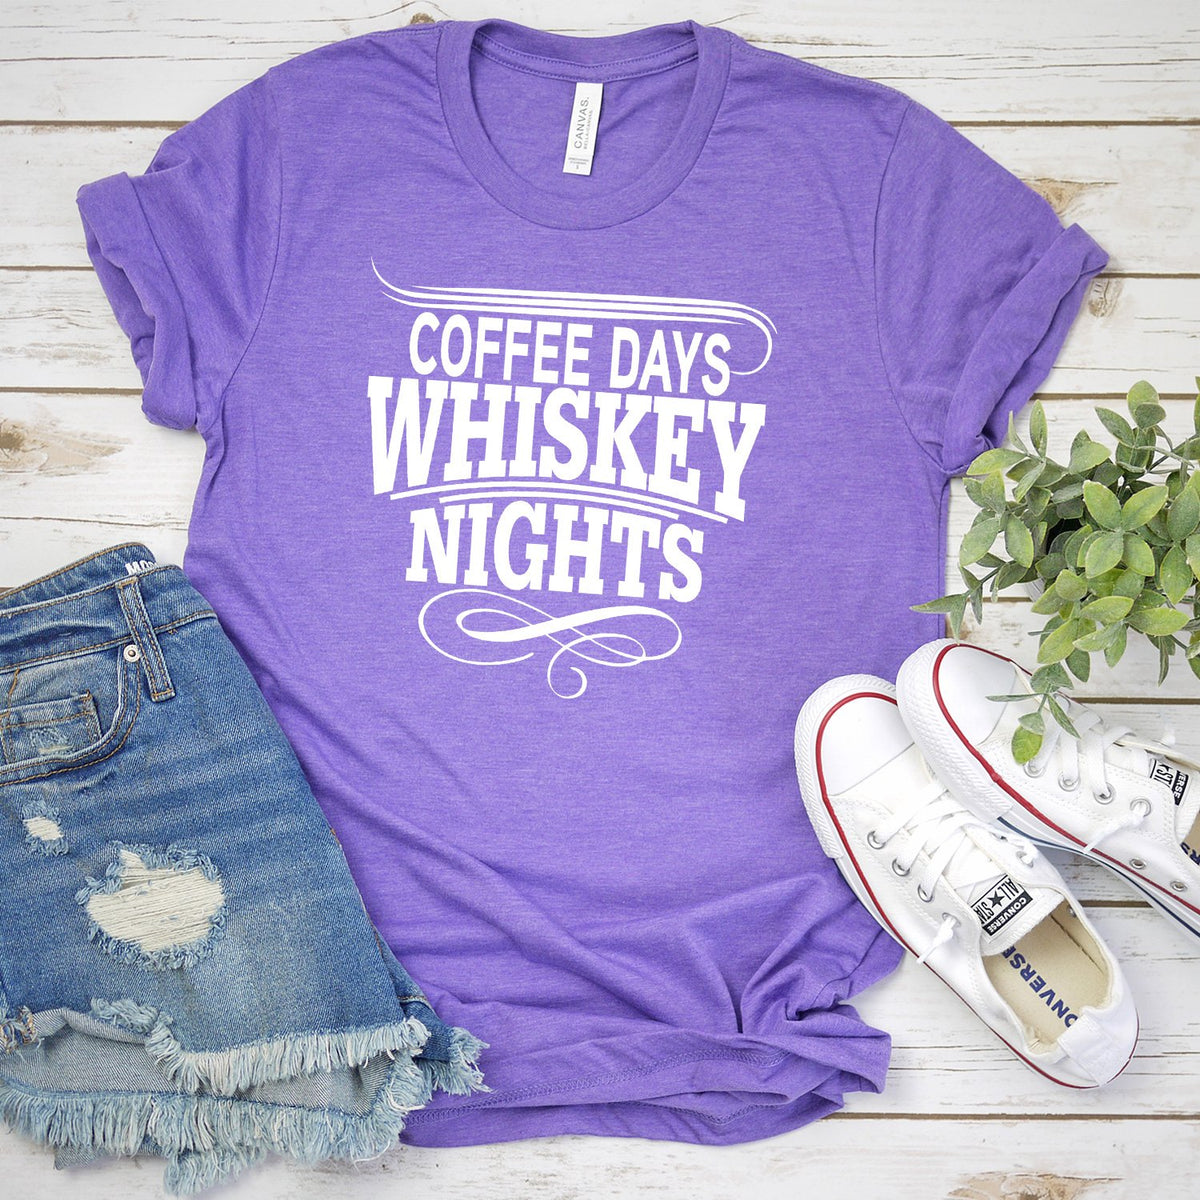 Coffee Days Whiskey Nights - Short Sleeve Tee Shirt